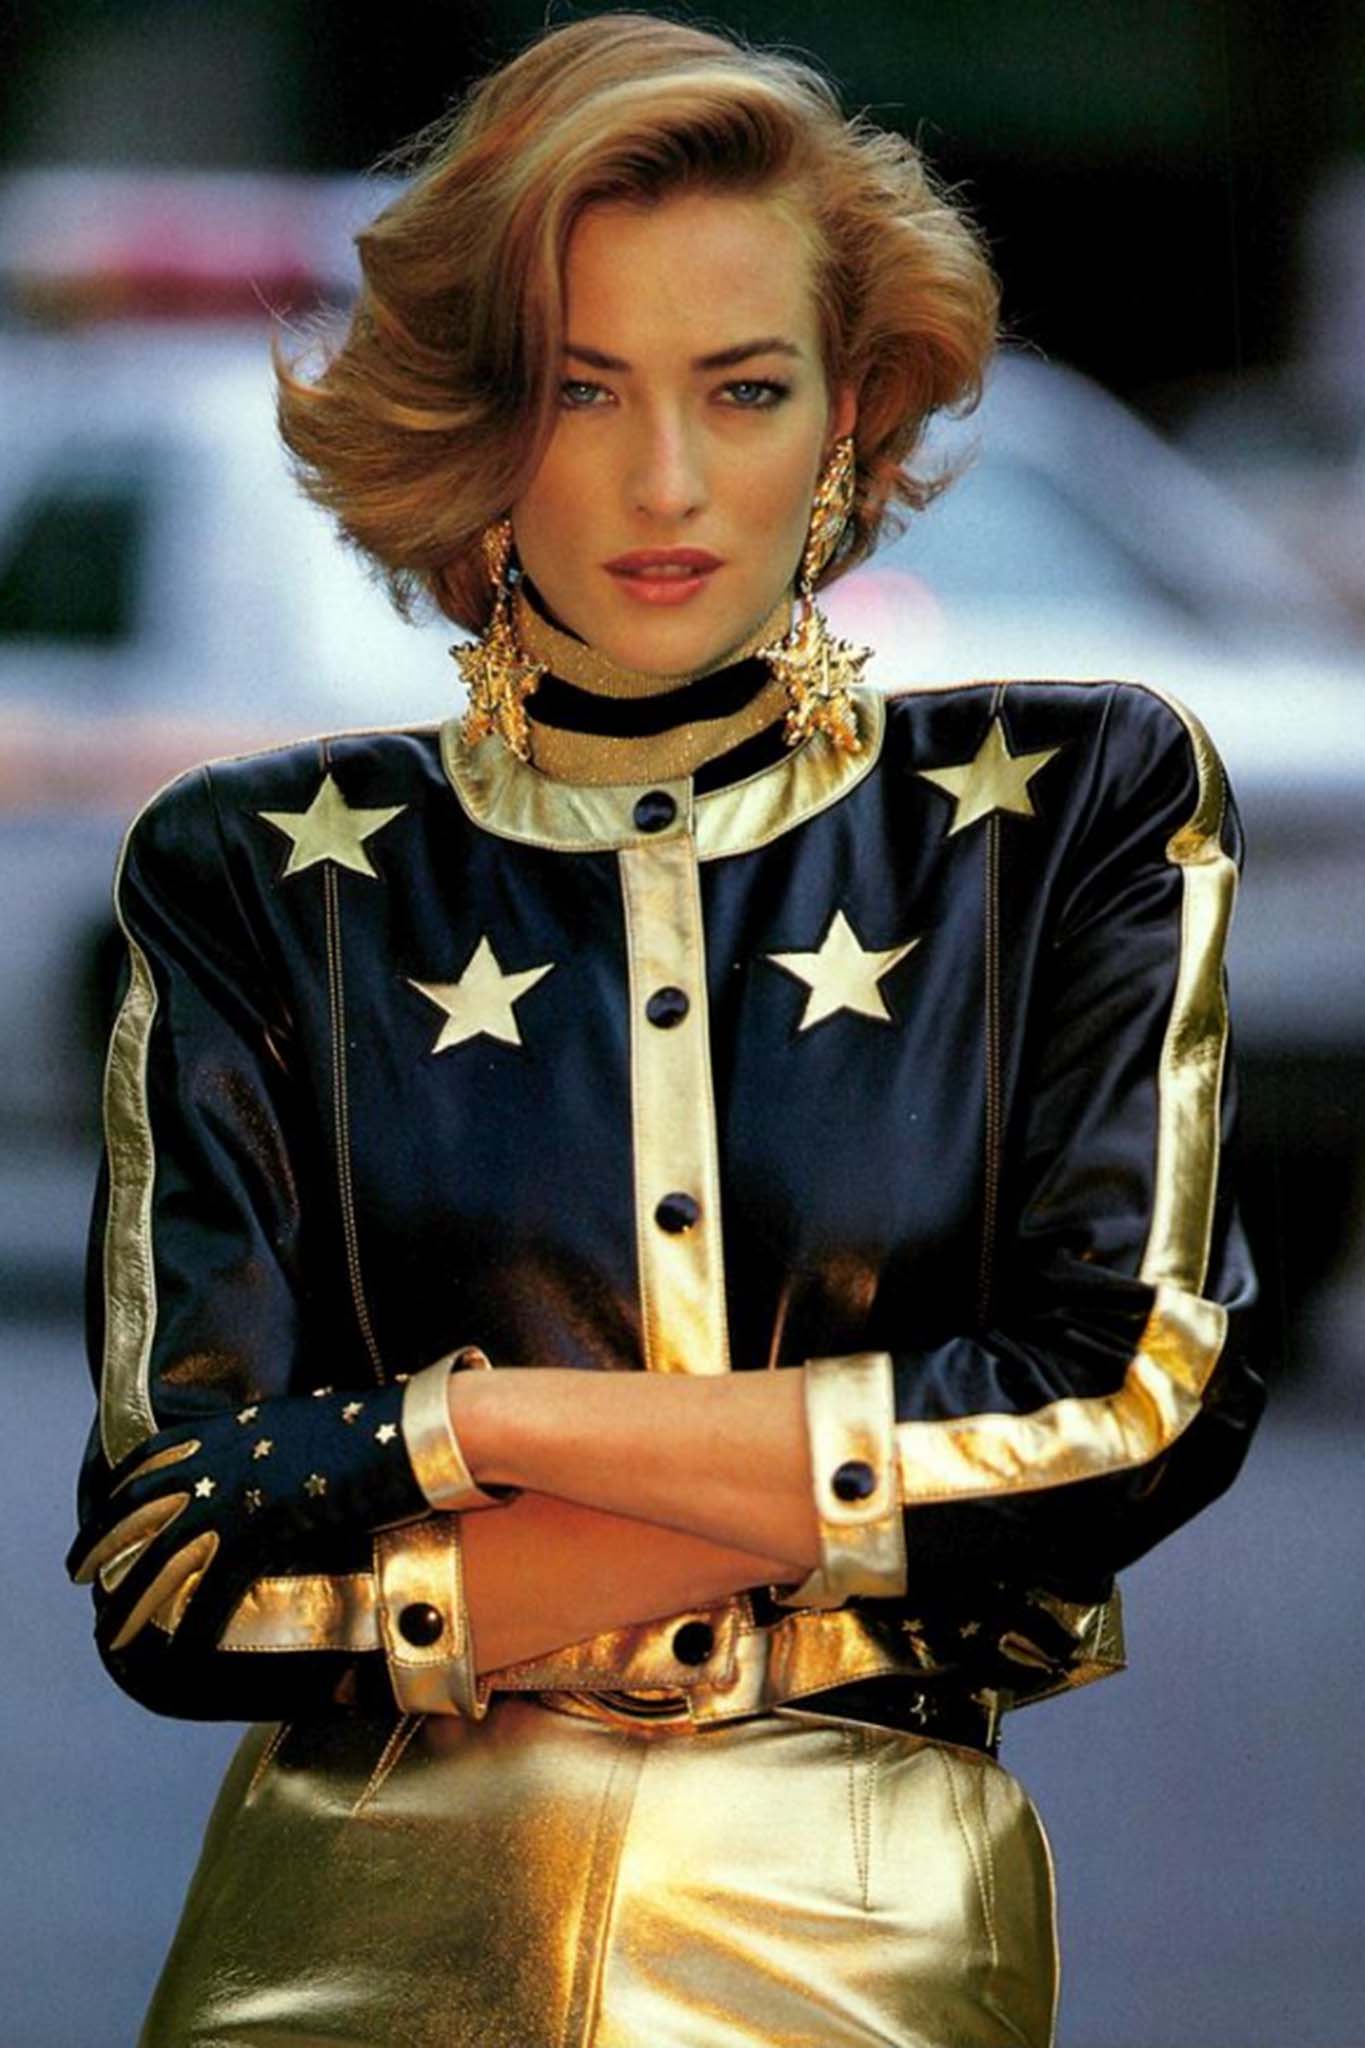 Vintage Escada Leather Star Boxy Jacket on Tatjana Patitz Recess Los Angeles